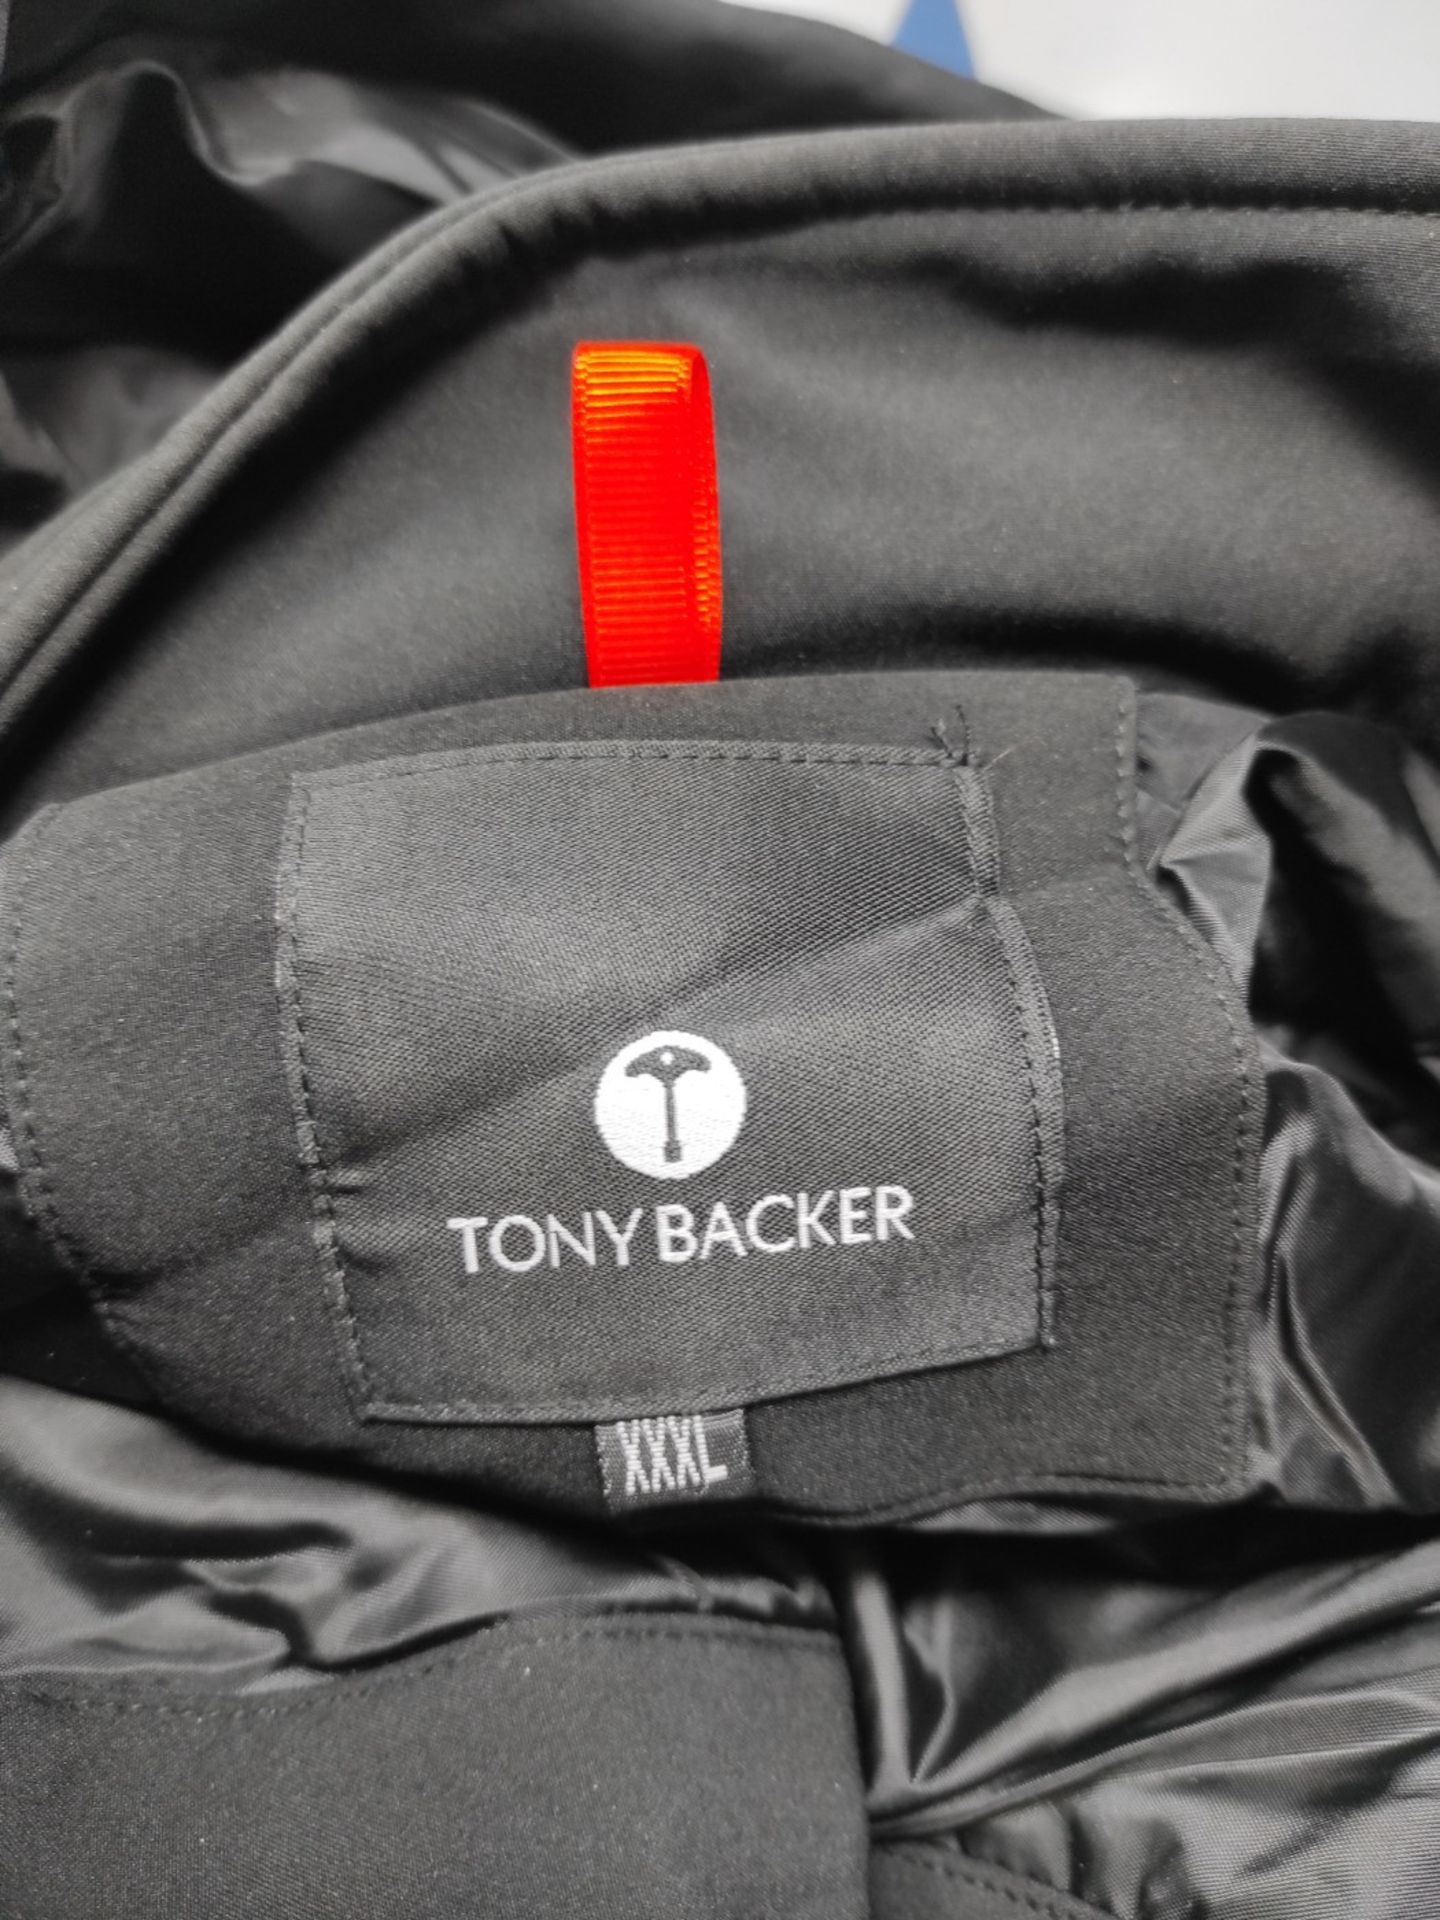 TONY BACKER Men's Winter Softshell Waterproof Windproof Jacket with Hood Warm Casual T - Image 2 of 2